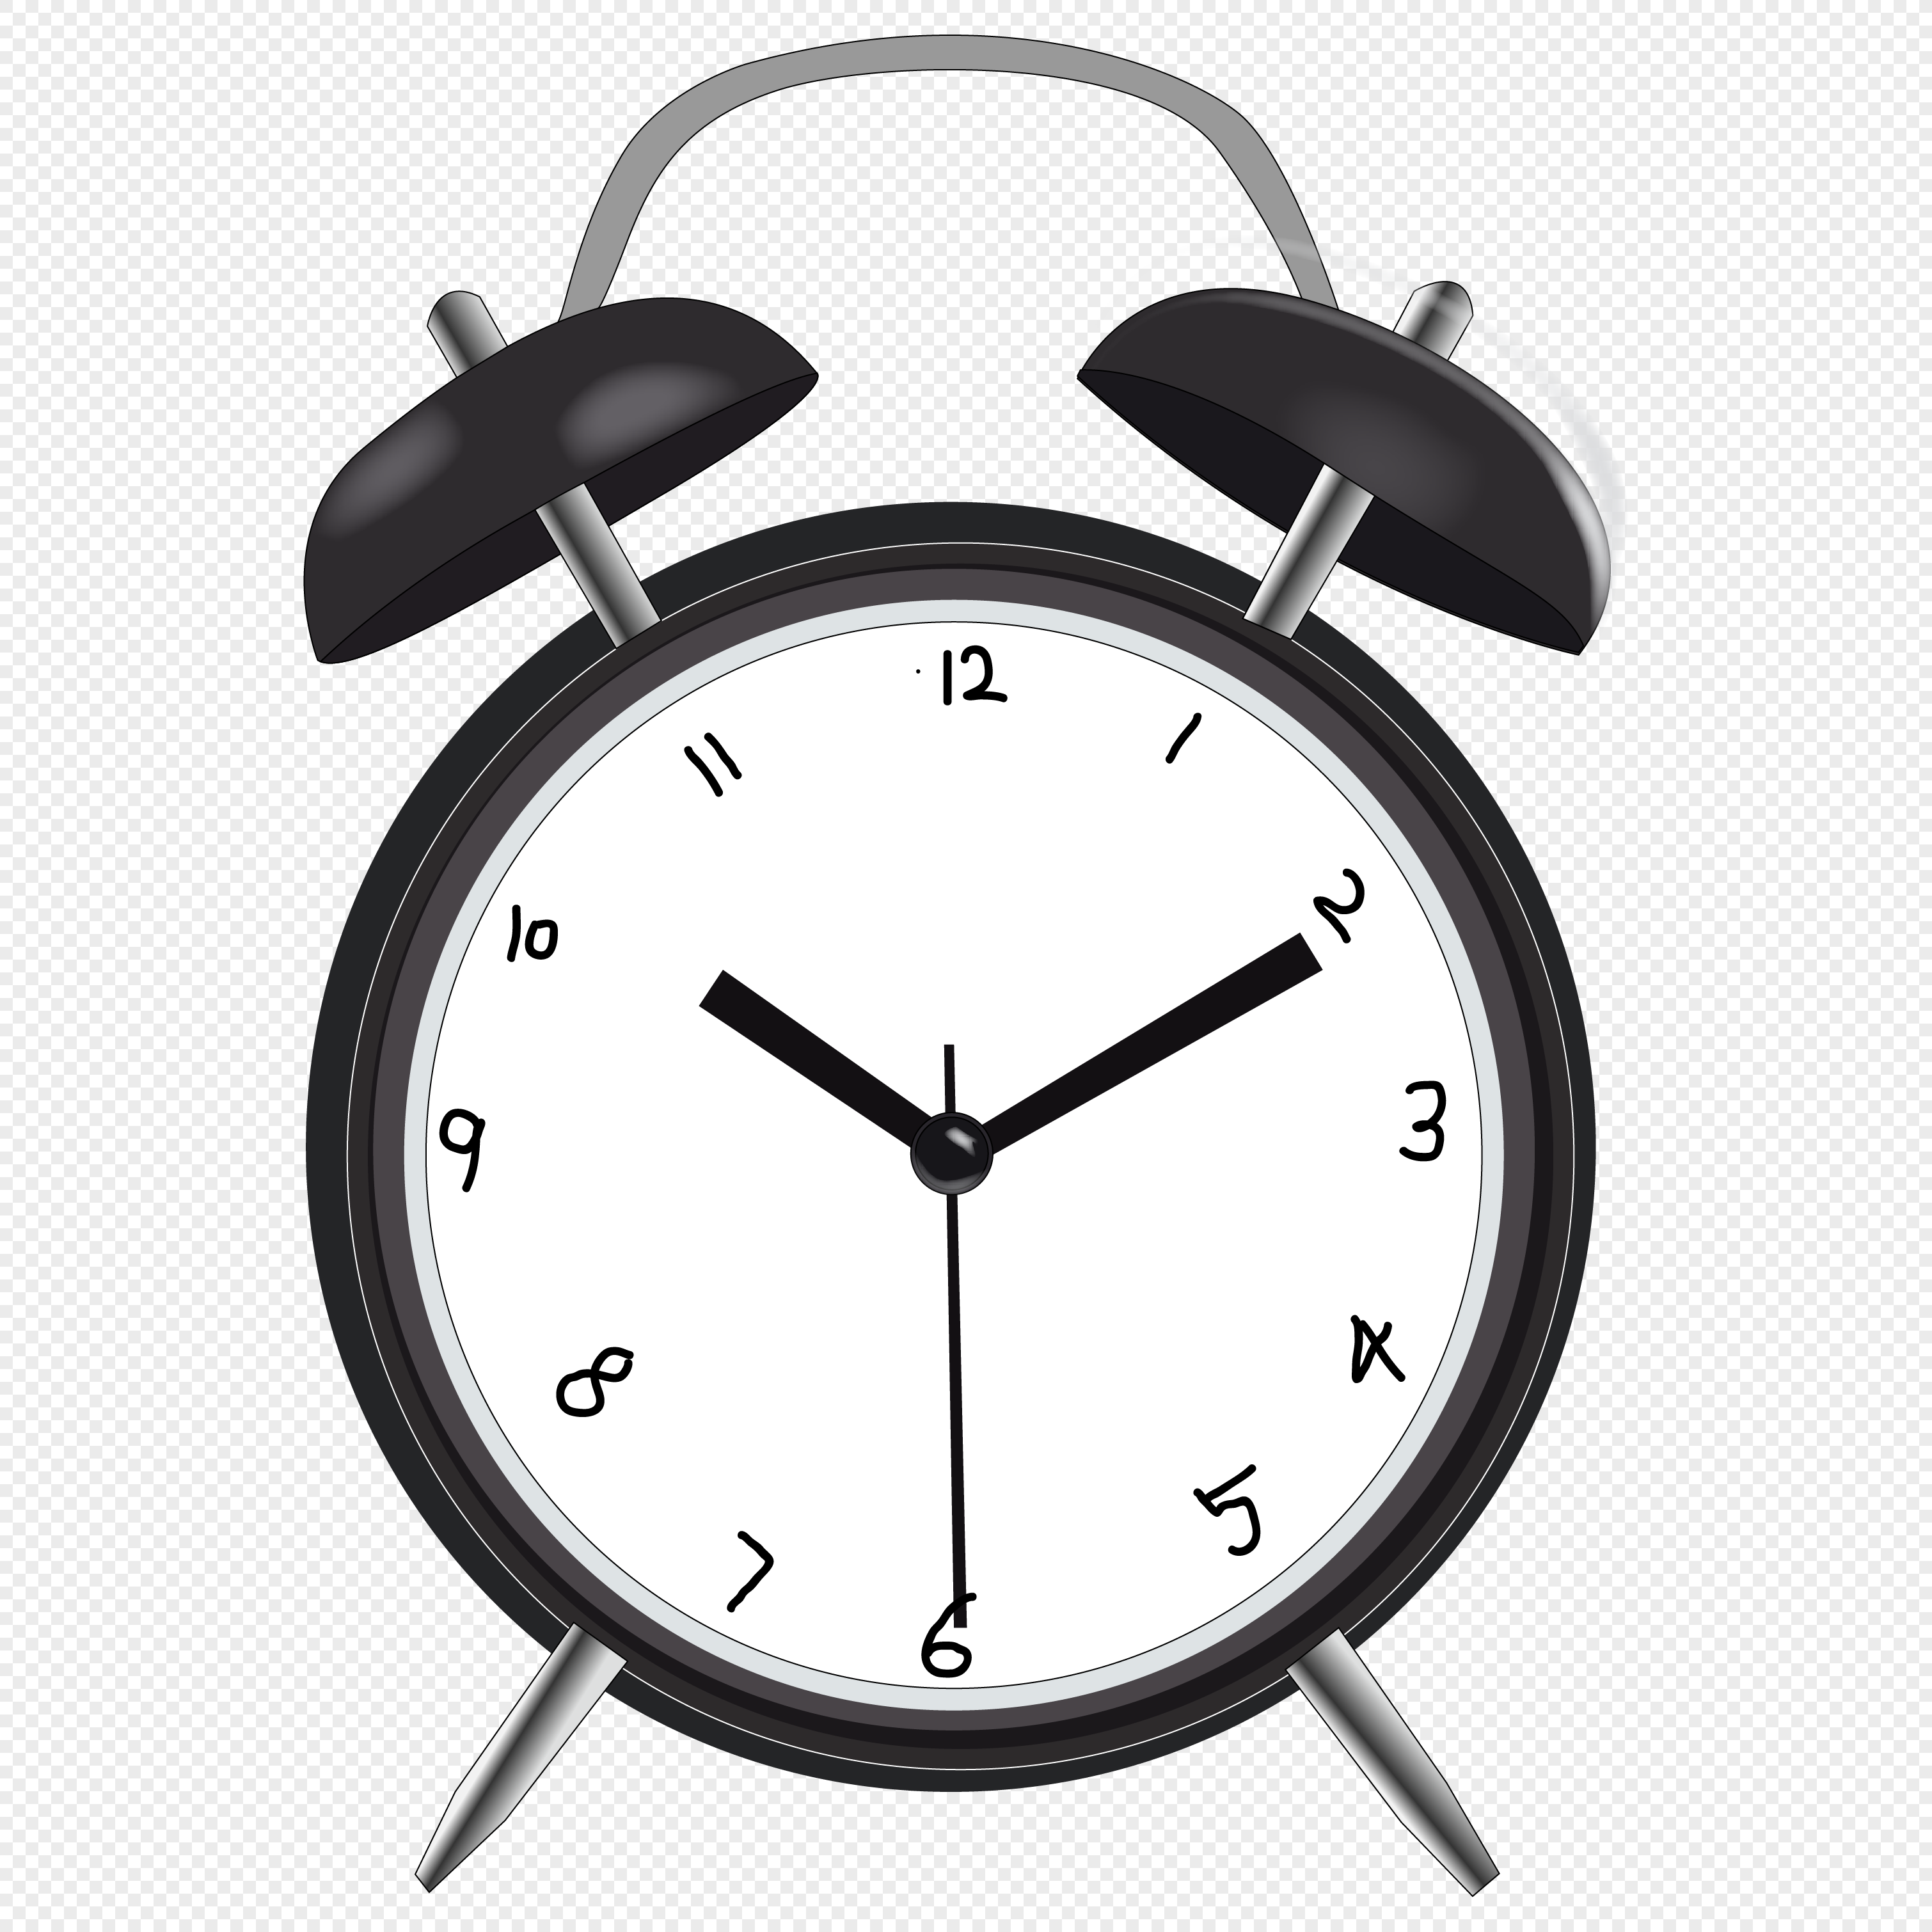 Cartoon Hand Drawn Black Alarm Clock PNG Image & PSD File Free Download